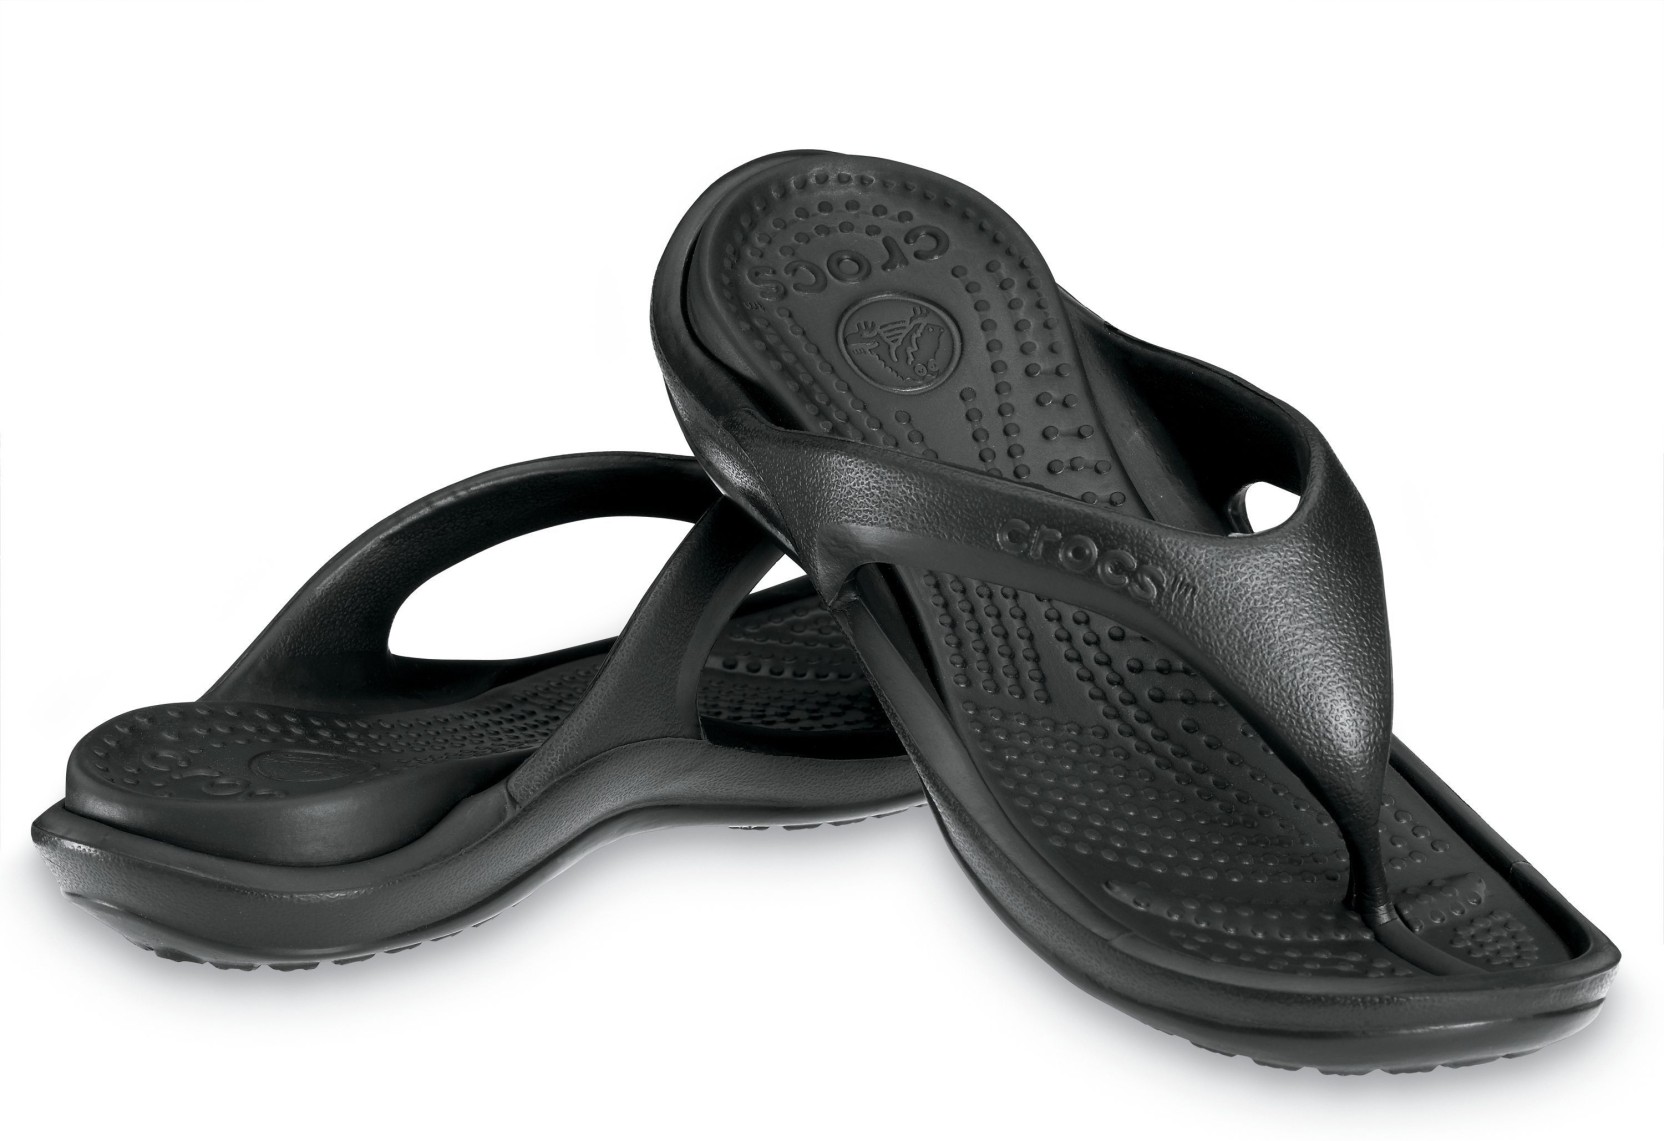 Crocs Flip Flops - Buy Black, Black Color Crocs Flip Flops Online at ...